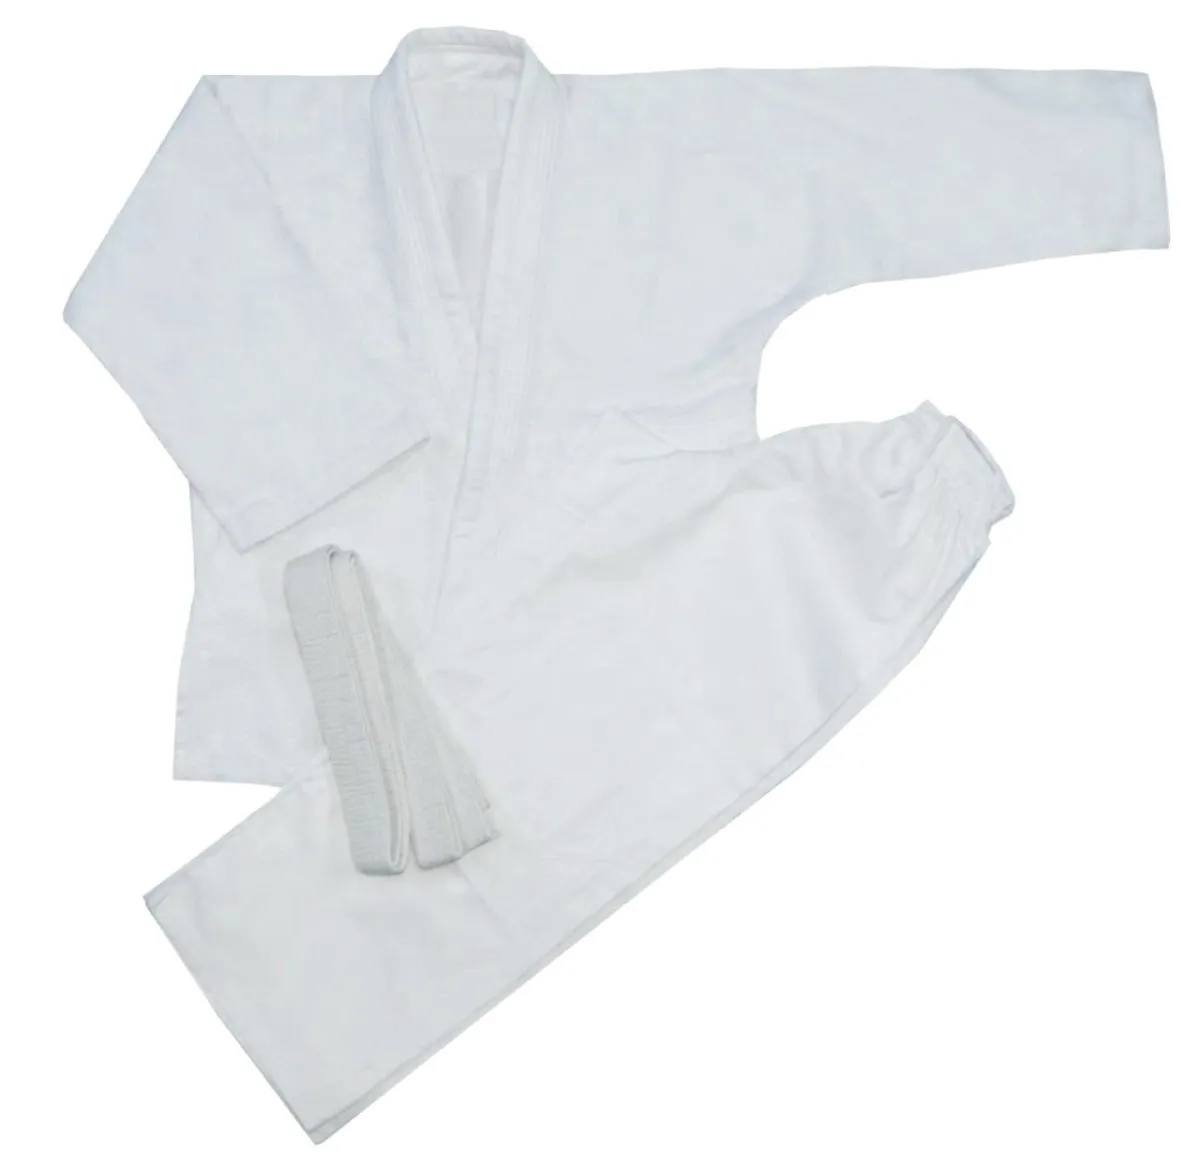 Judo uniform basic